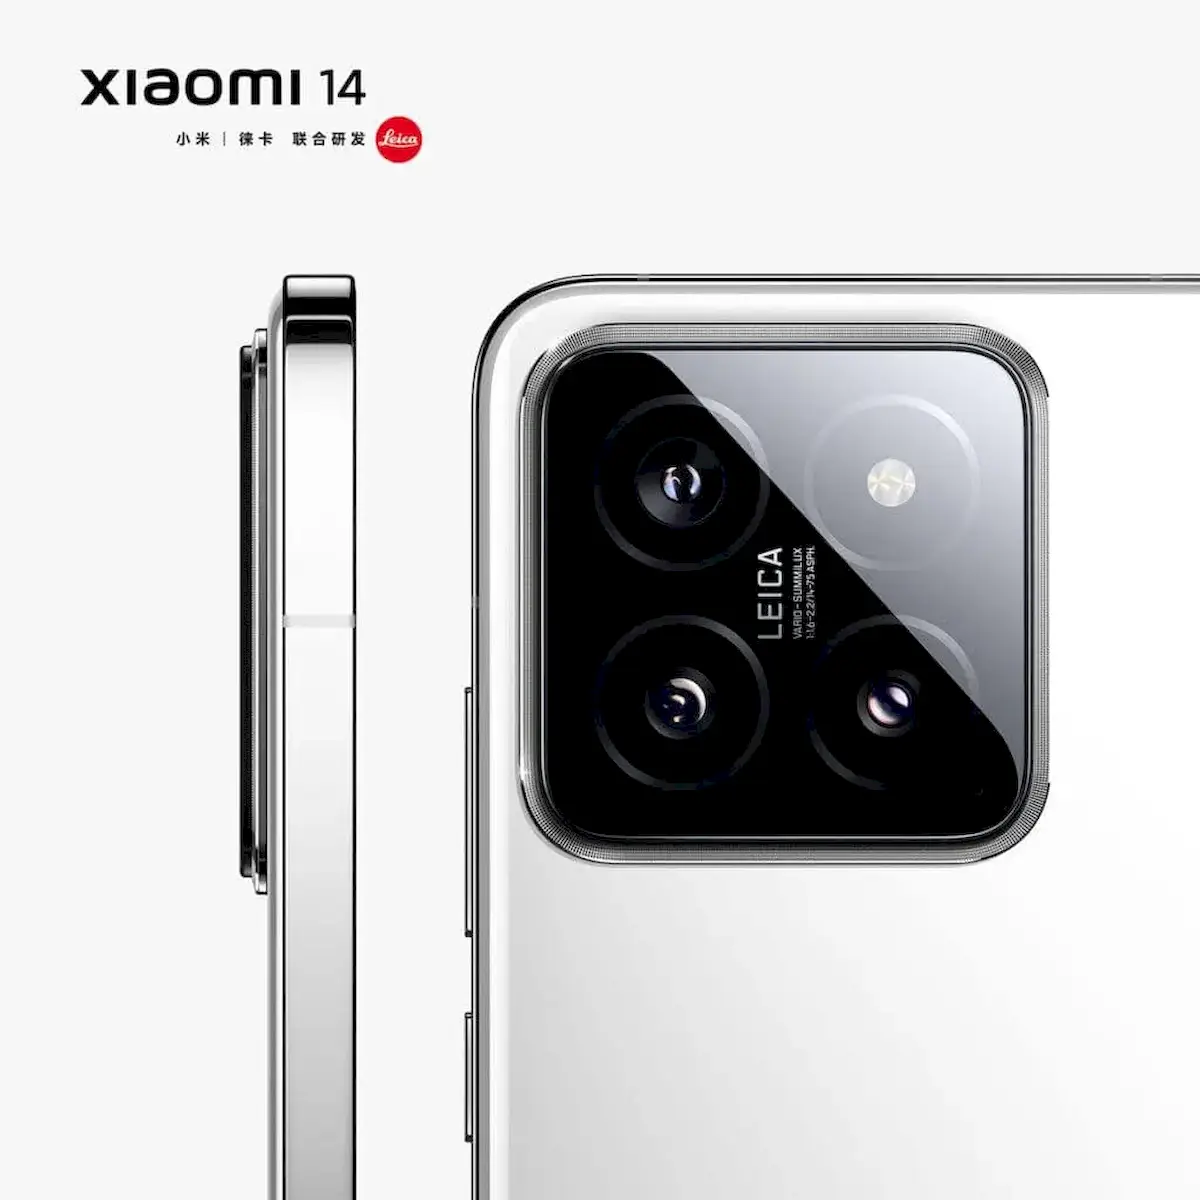 Xiaomi revelou oficialmente o design do Xiaomi 14